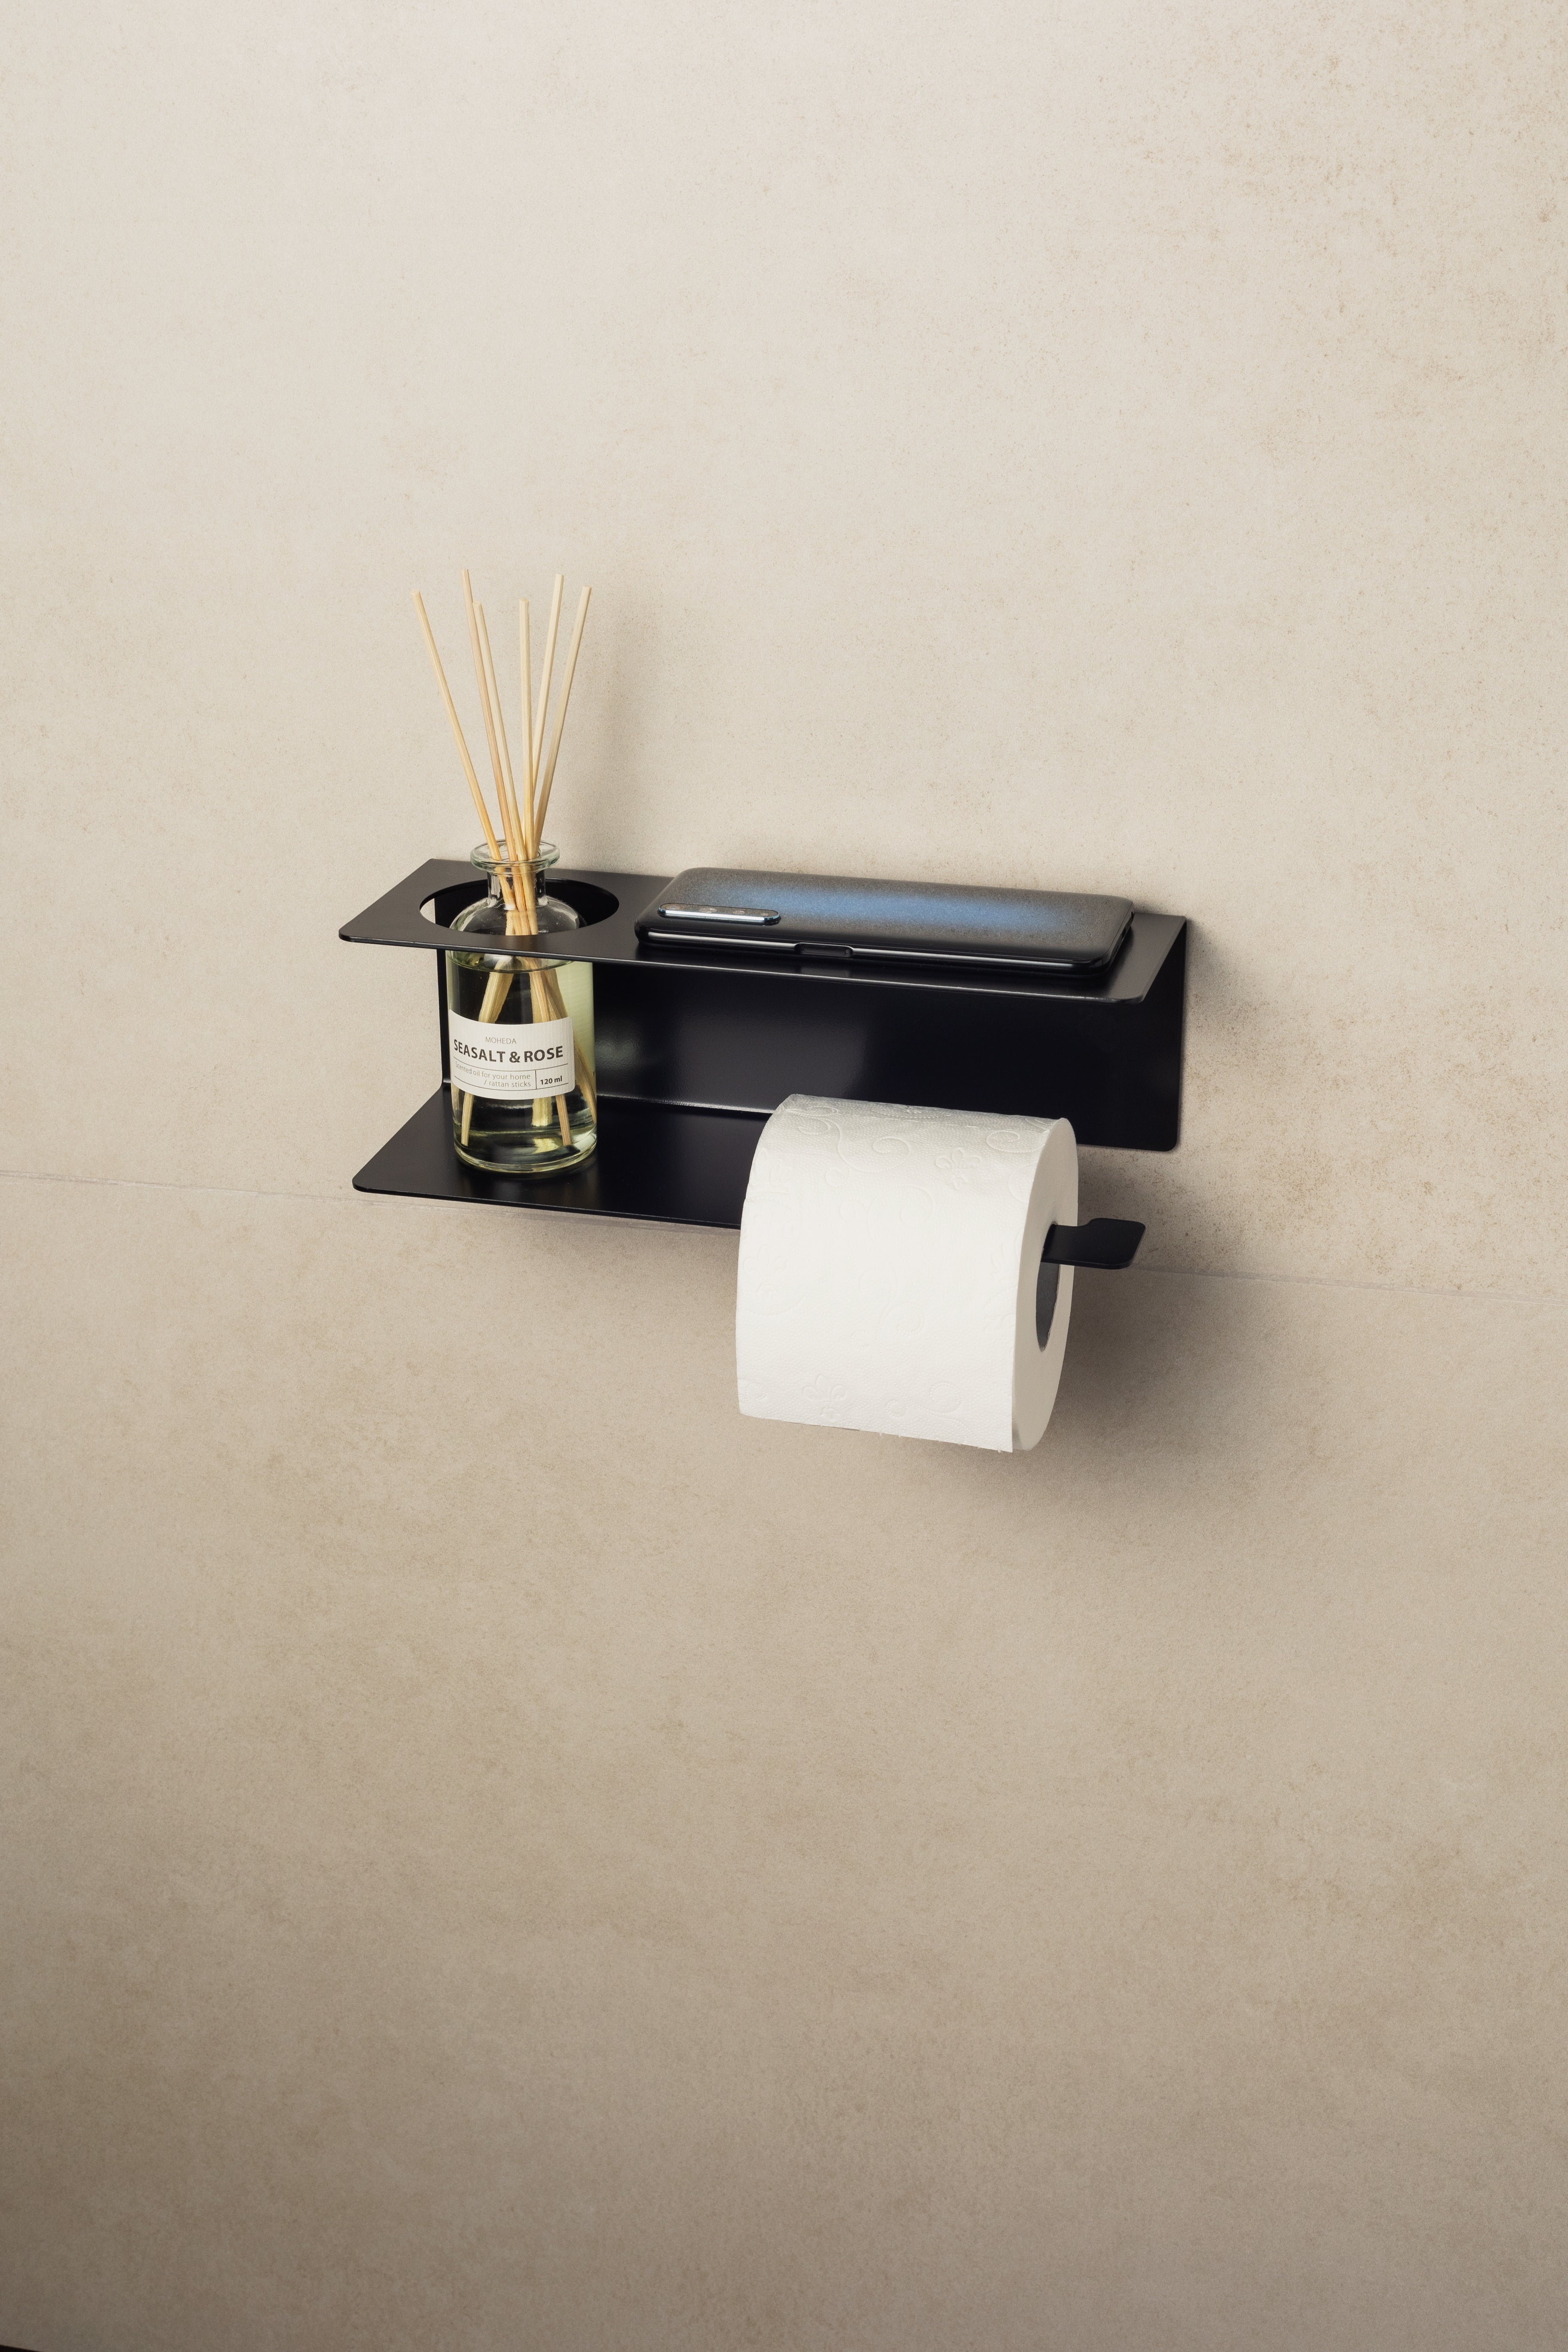 Toilet Paper Holder with Shelf Bliss